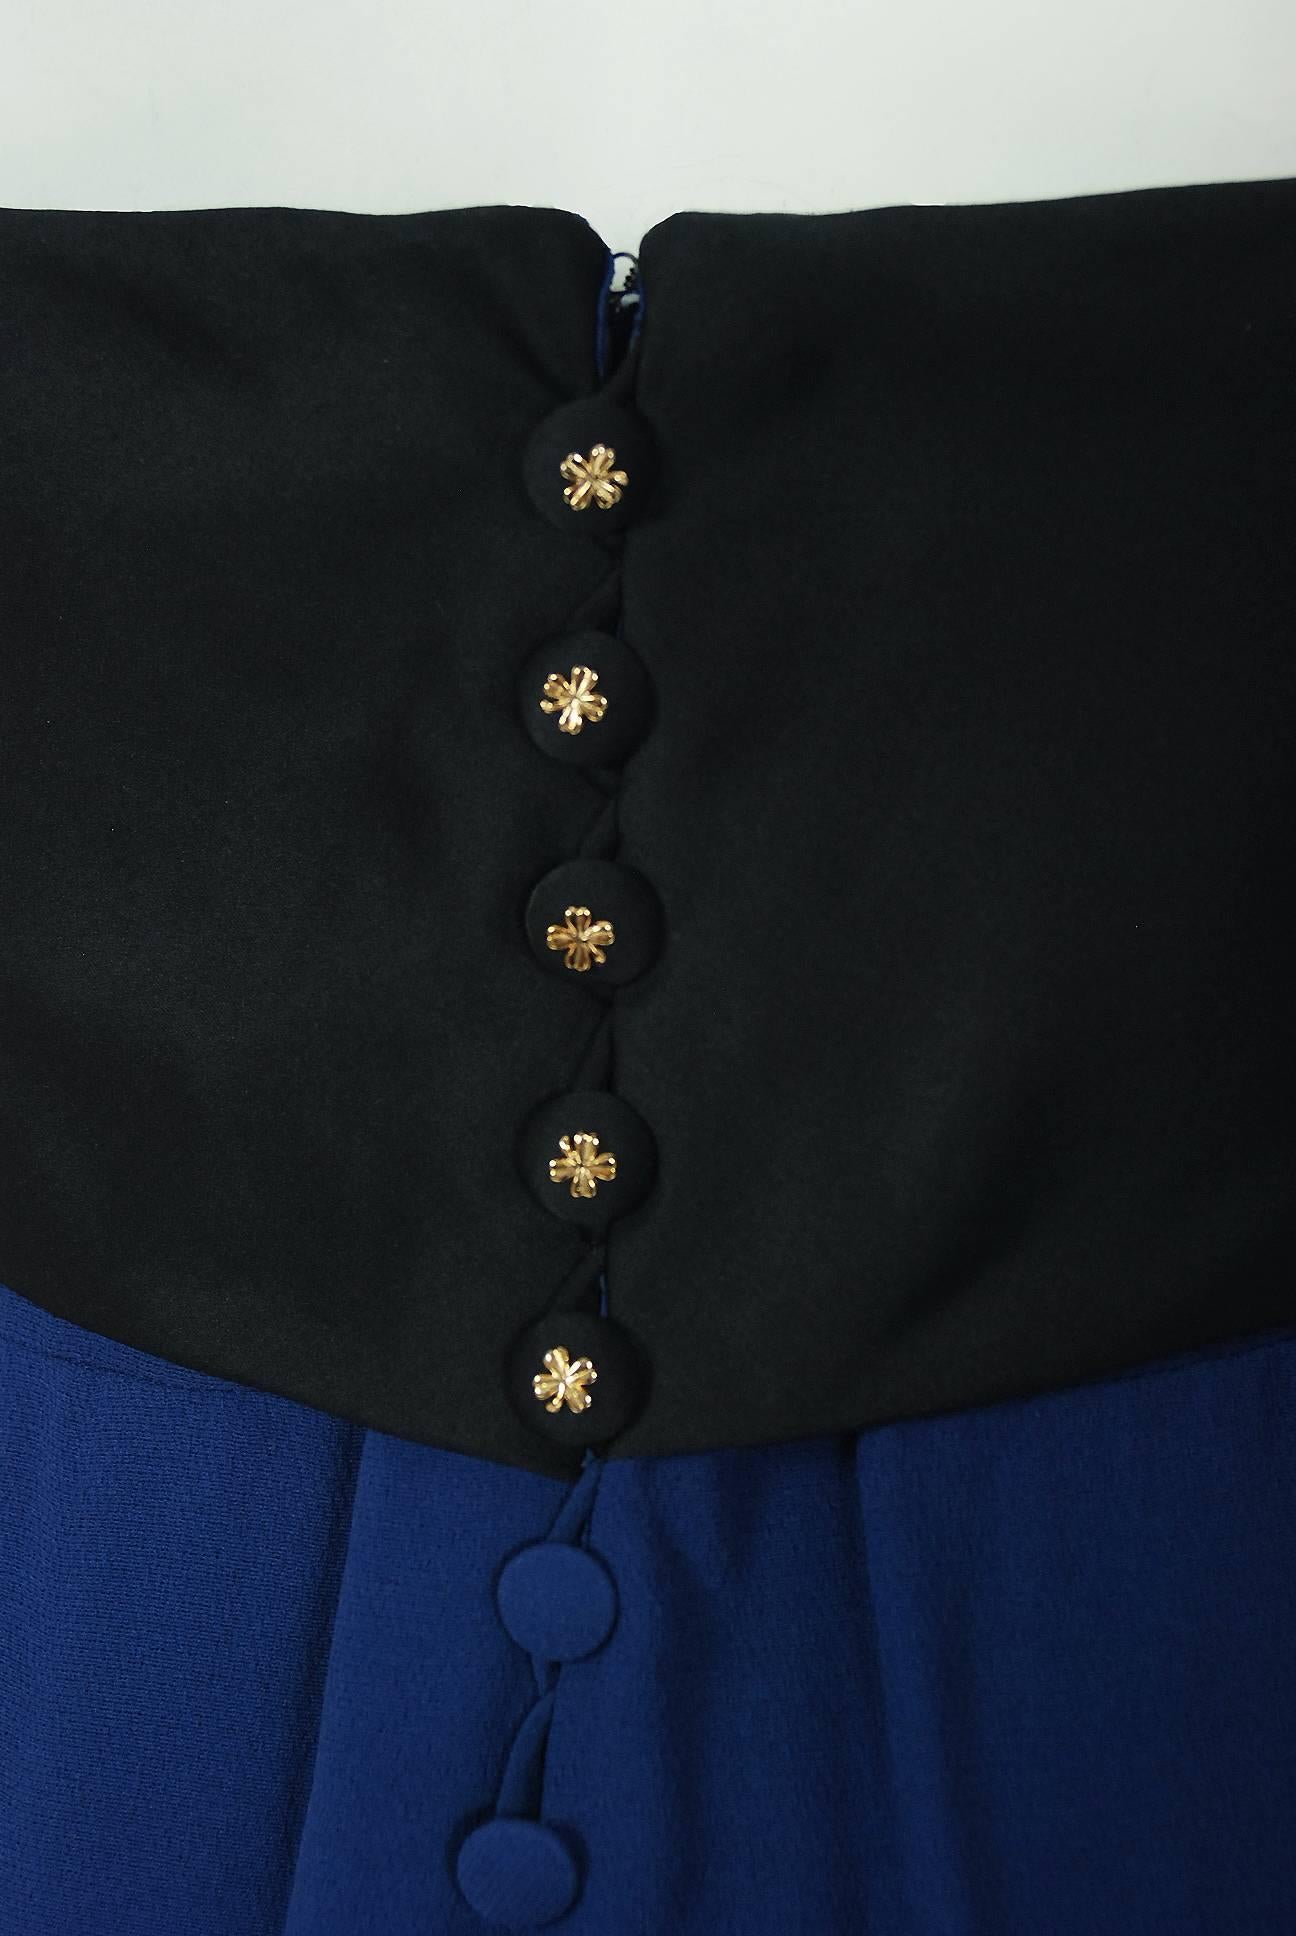 Vintage 1990 Chanel Runway Sapphire-Blue & Black Silk Strapless Dress w/ Shawl 1